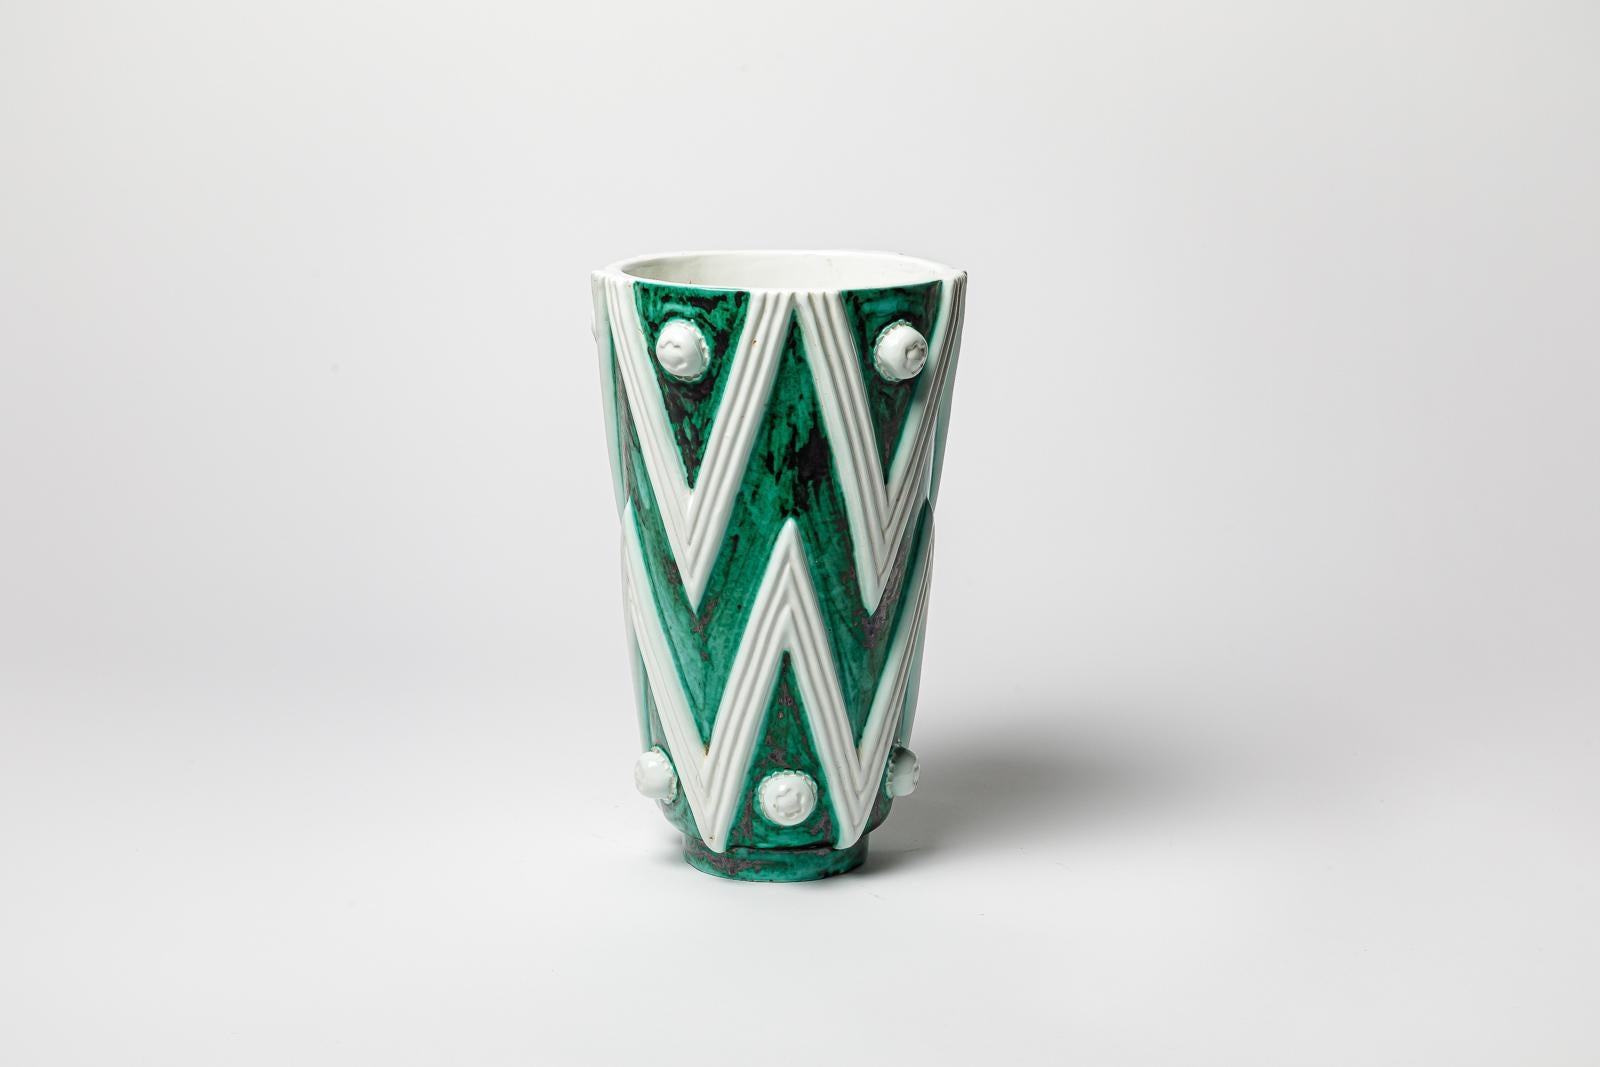 Beaux Arts Green and white glazed ceramic vase by Sainte Radegonde, circa 1960-1970.